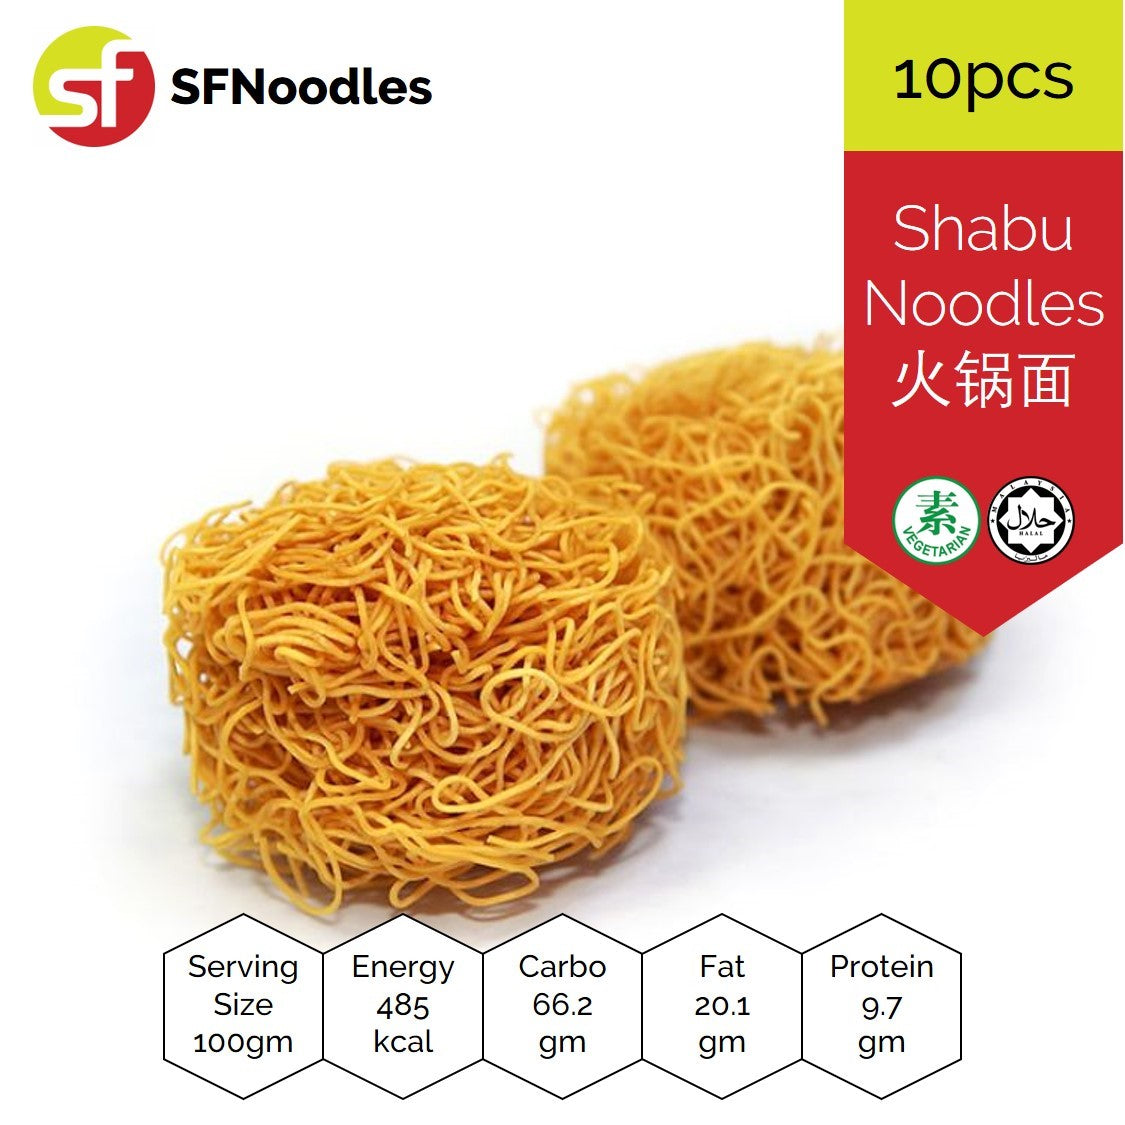 Shabu Noodles (Hotpot Noodles, 火锅面)